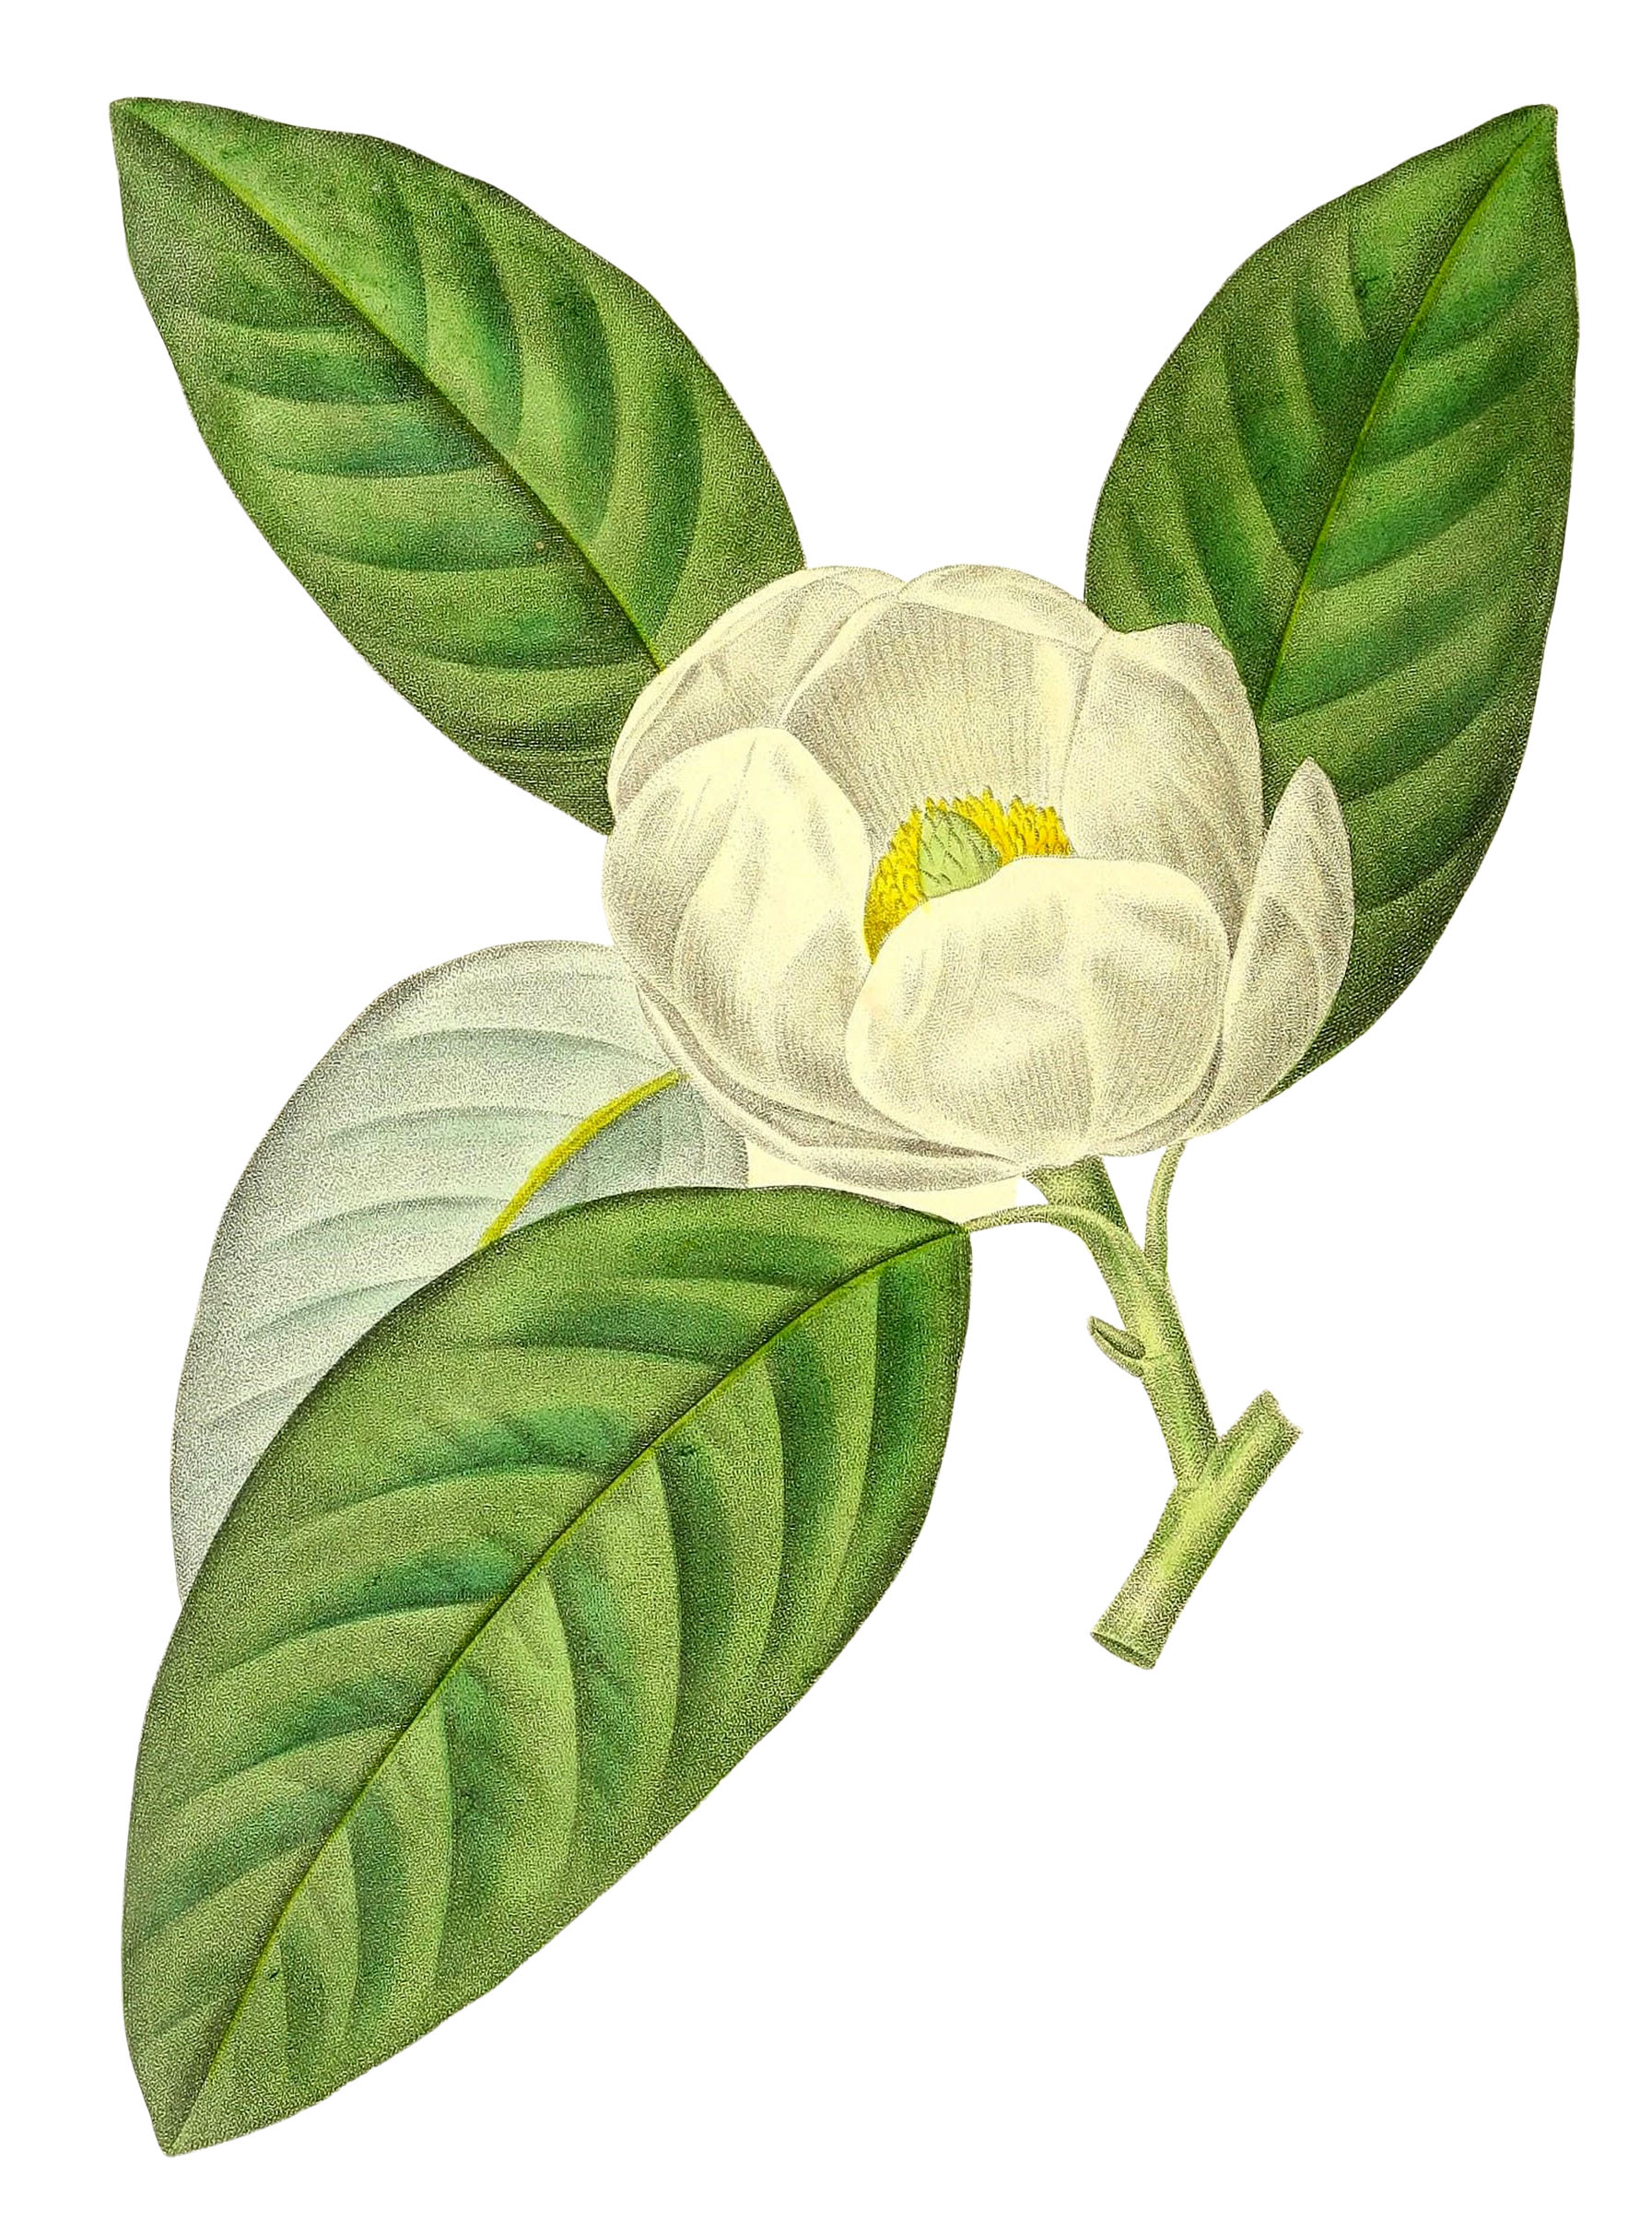 Small White Magnolia Flower